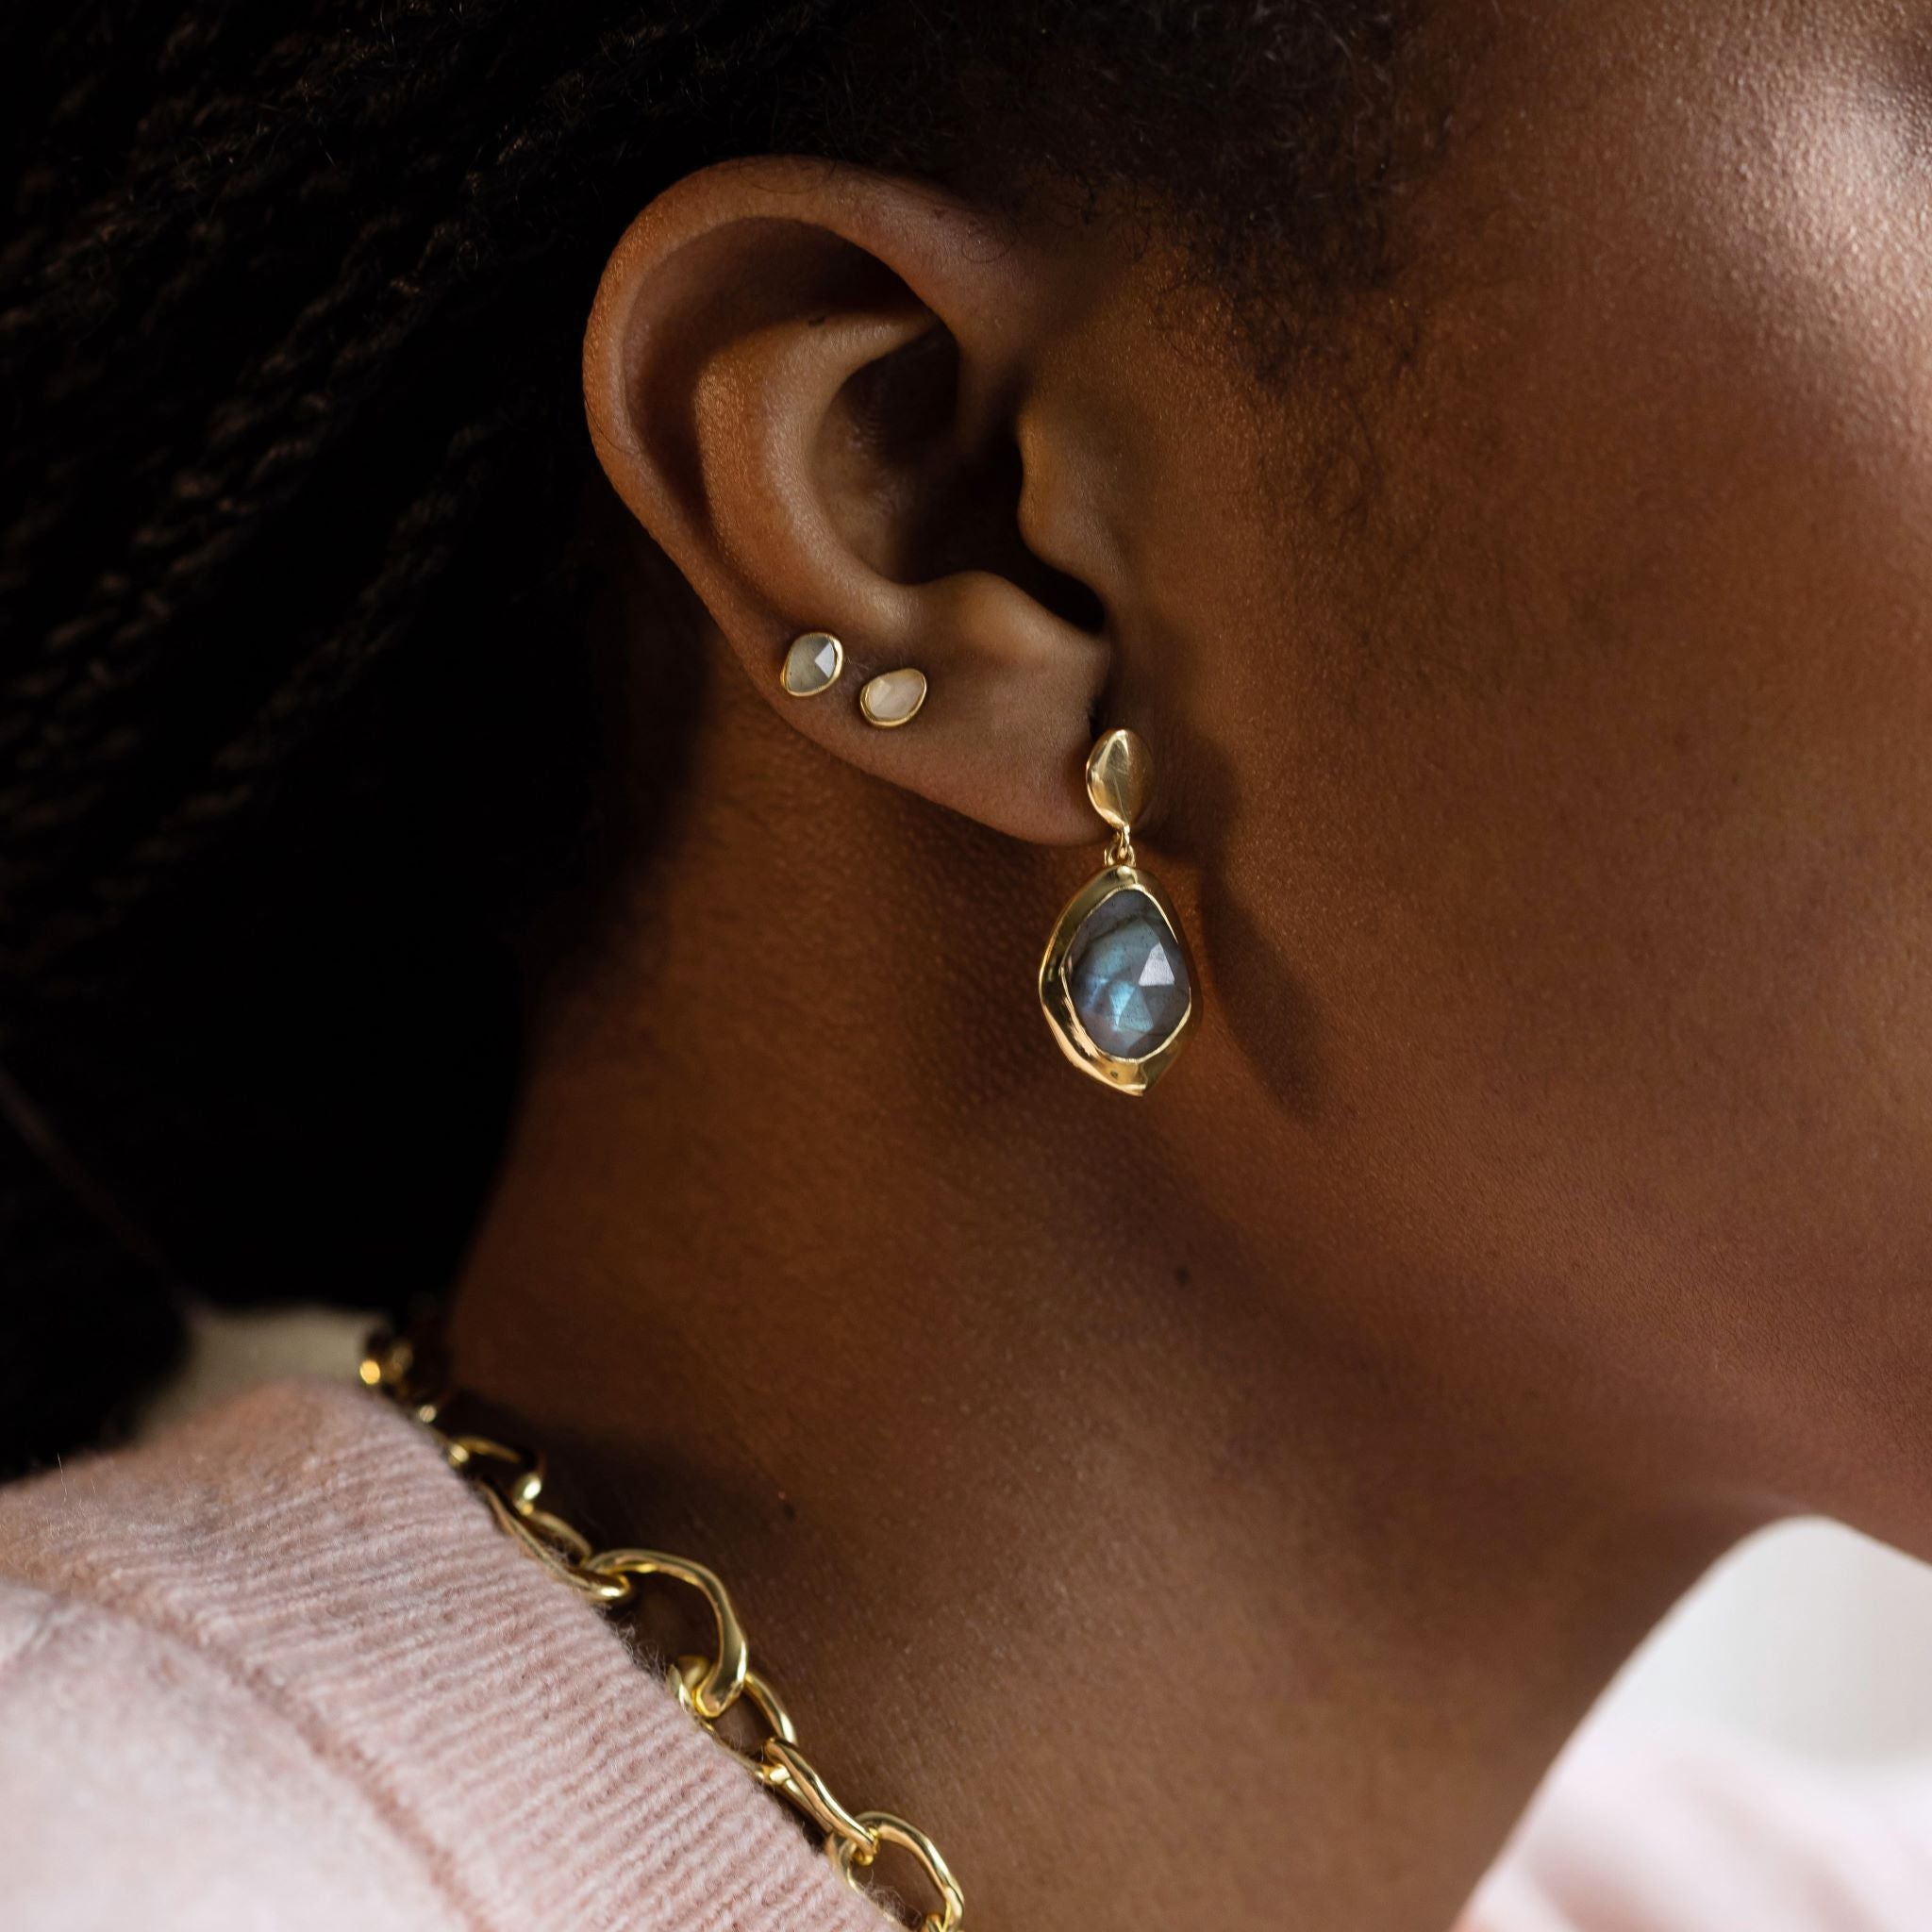 sterling silver and gold vermeil earrings in 8 stunning natural handcut gemstones, Aqua Chalcedony,Green Tourmaline,Rose Quartz,Labradorite,Garnet,Iolite,Black Onyx,Moonstone